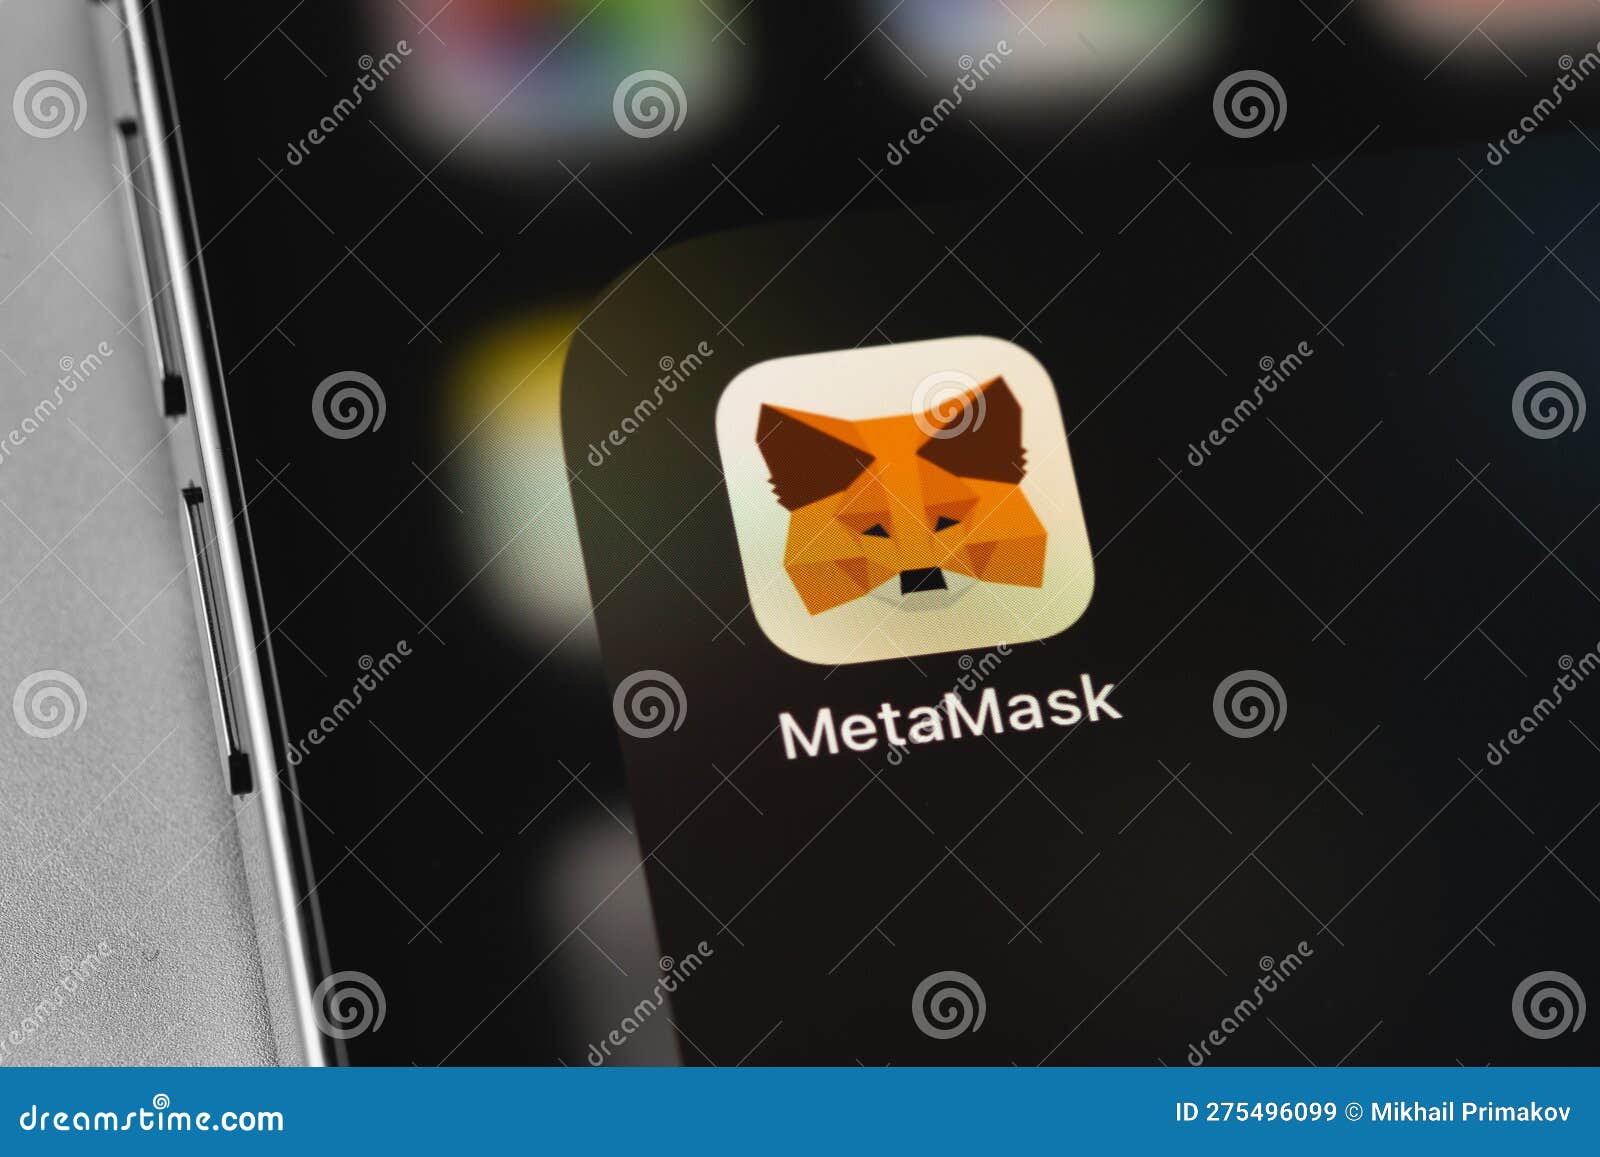 metamask mobile iphone